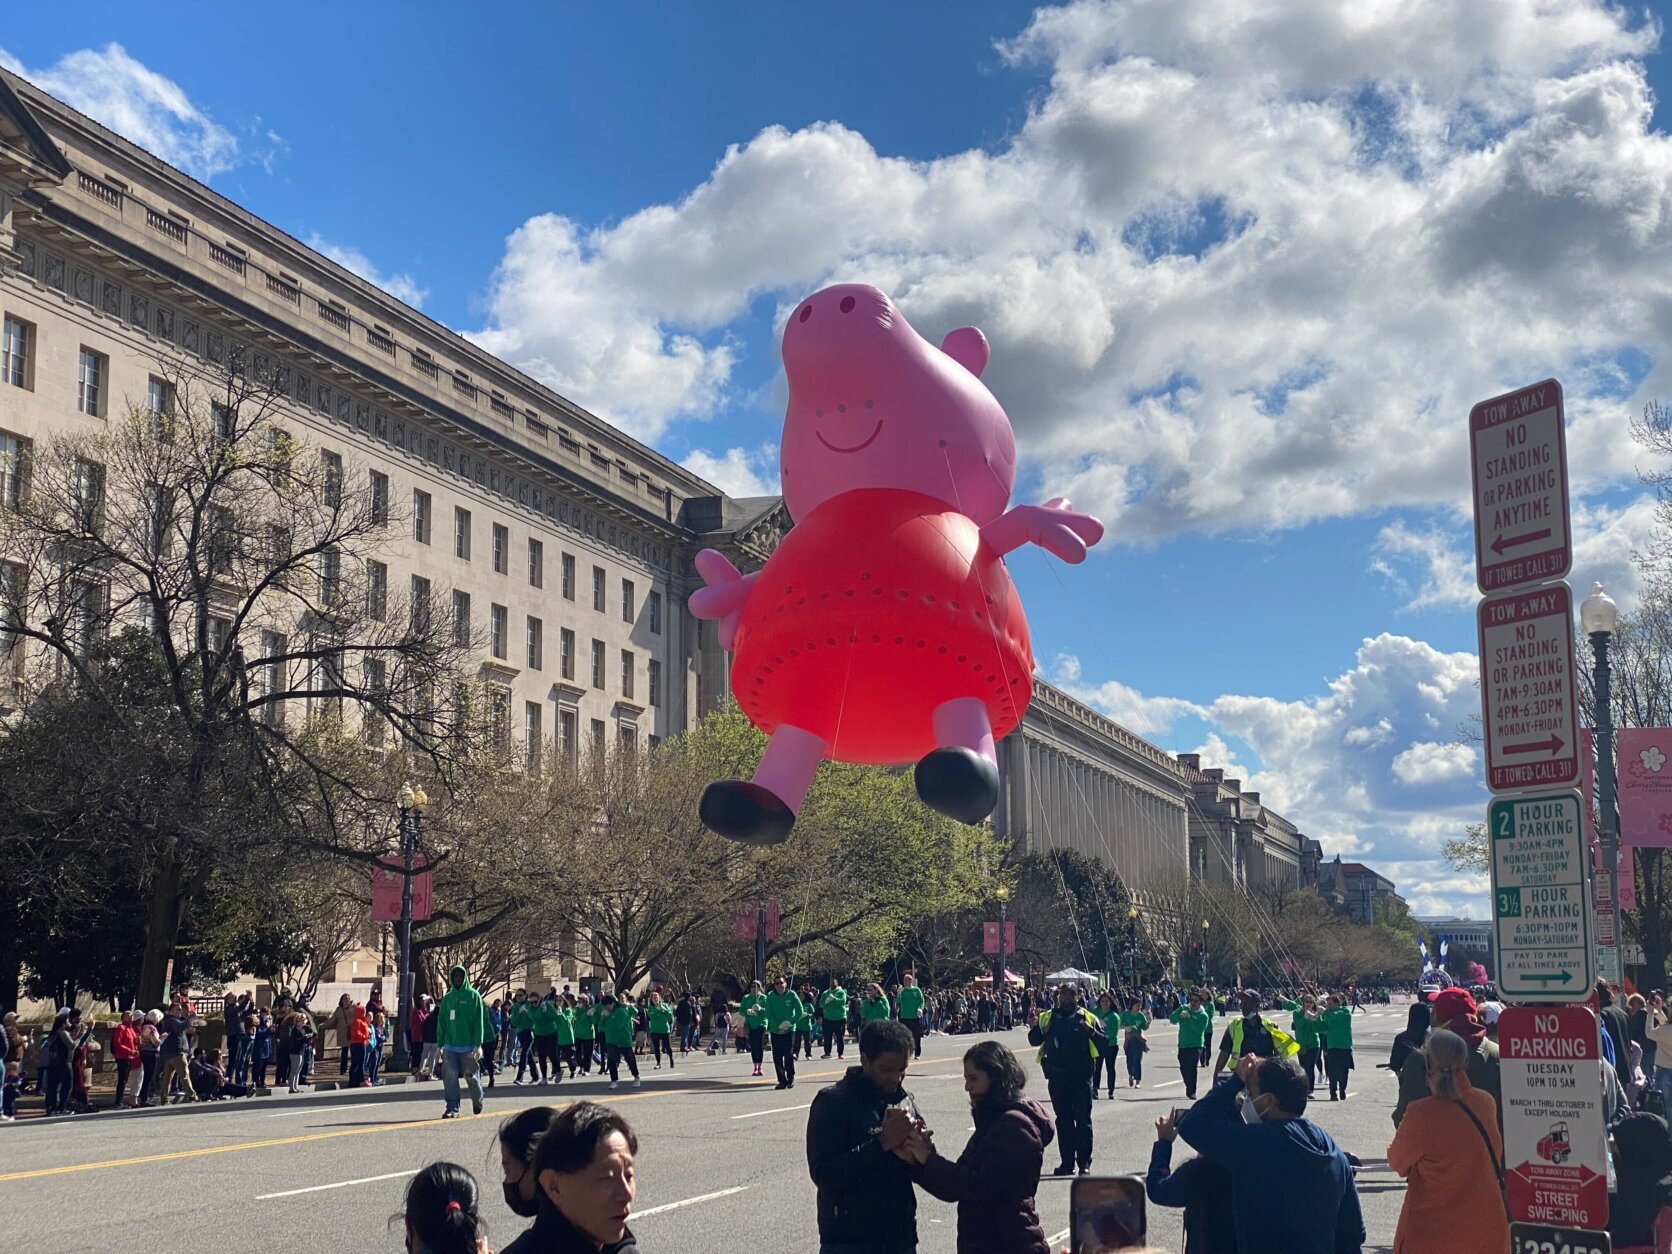 Cherry Blossom Festival Parade returns to DC after 3year hibernation